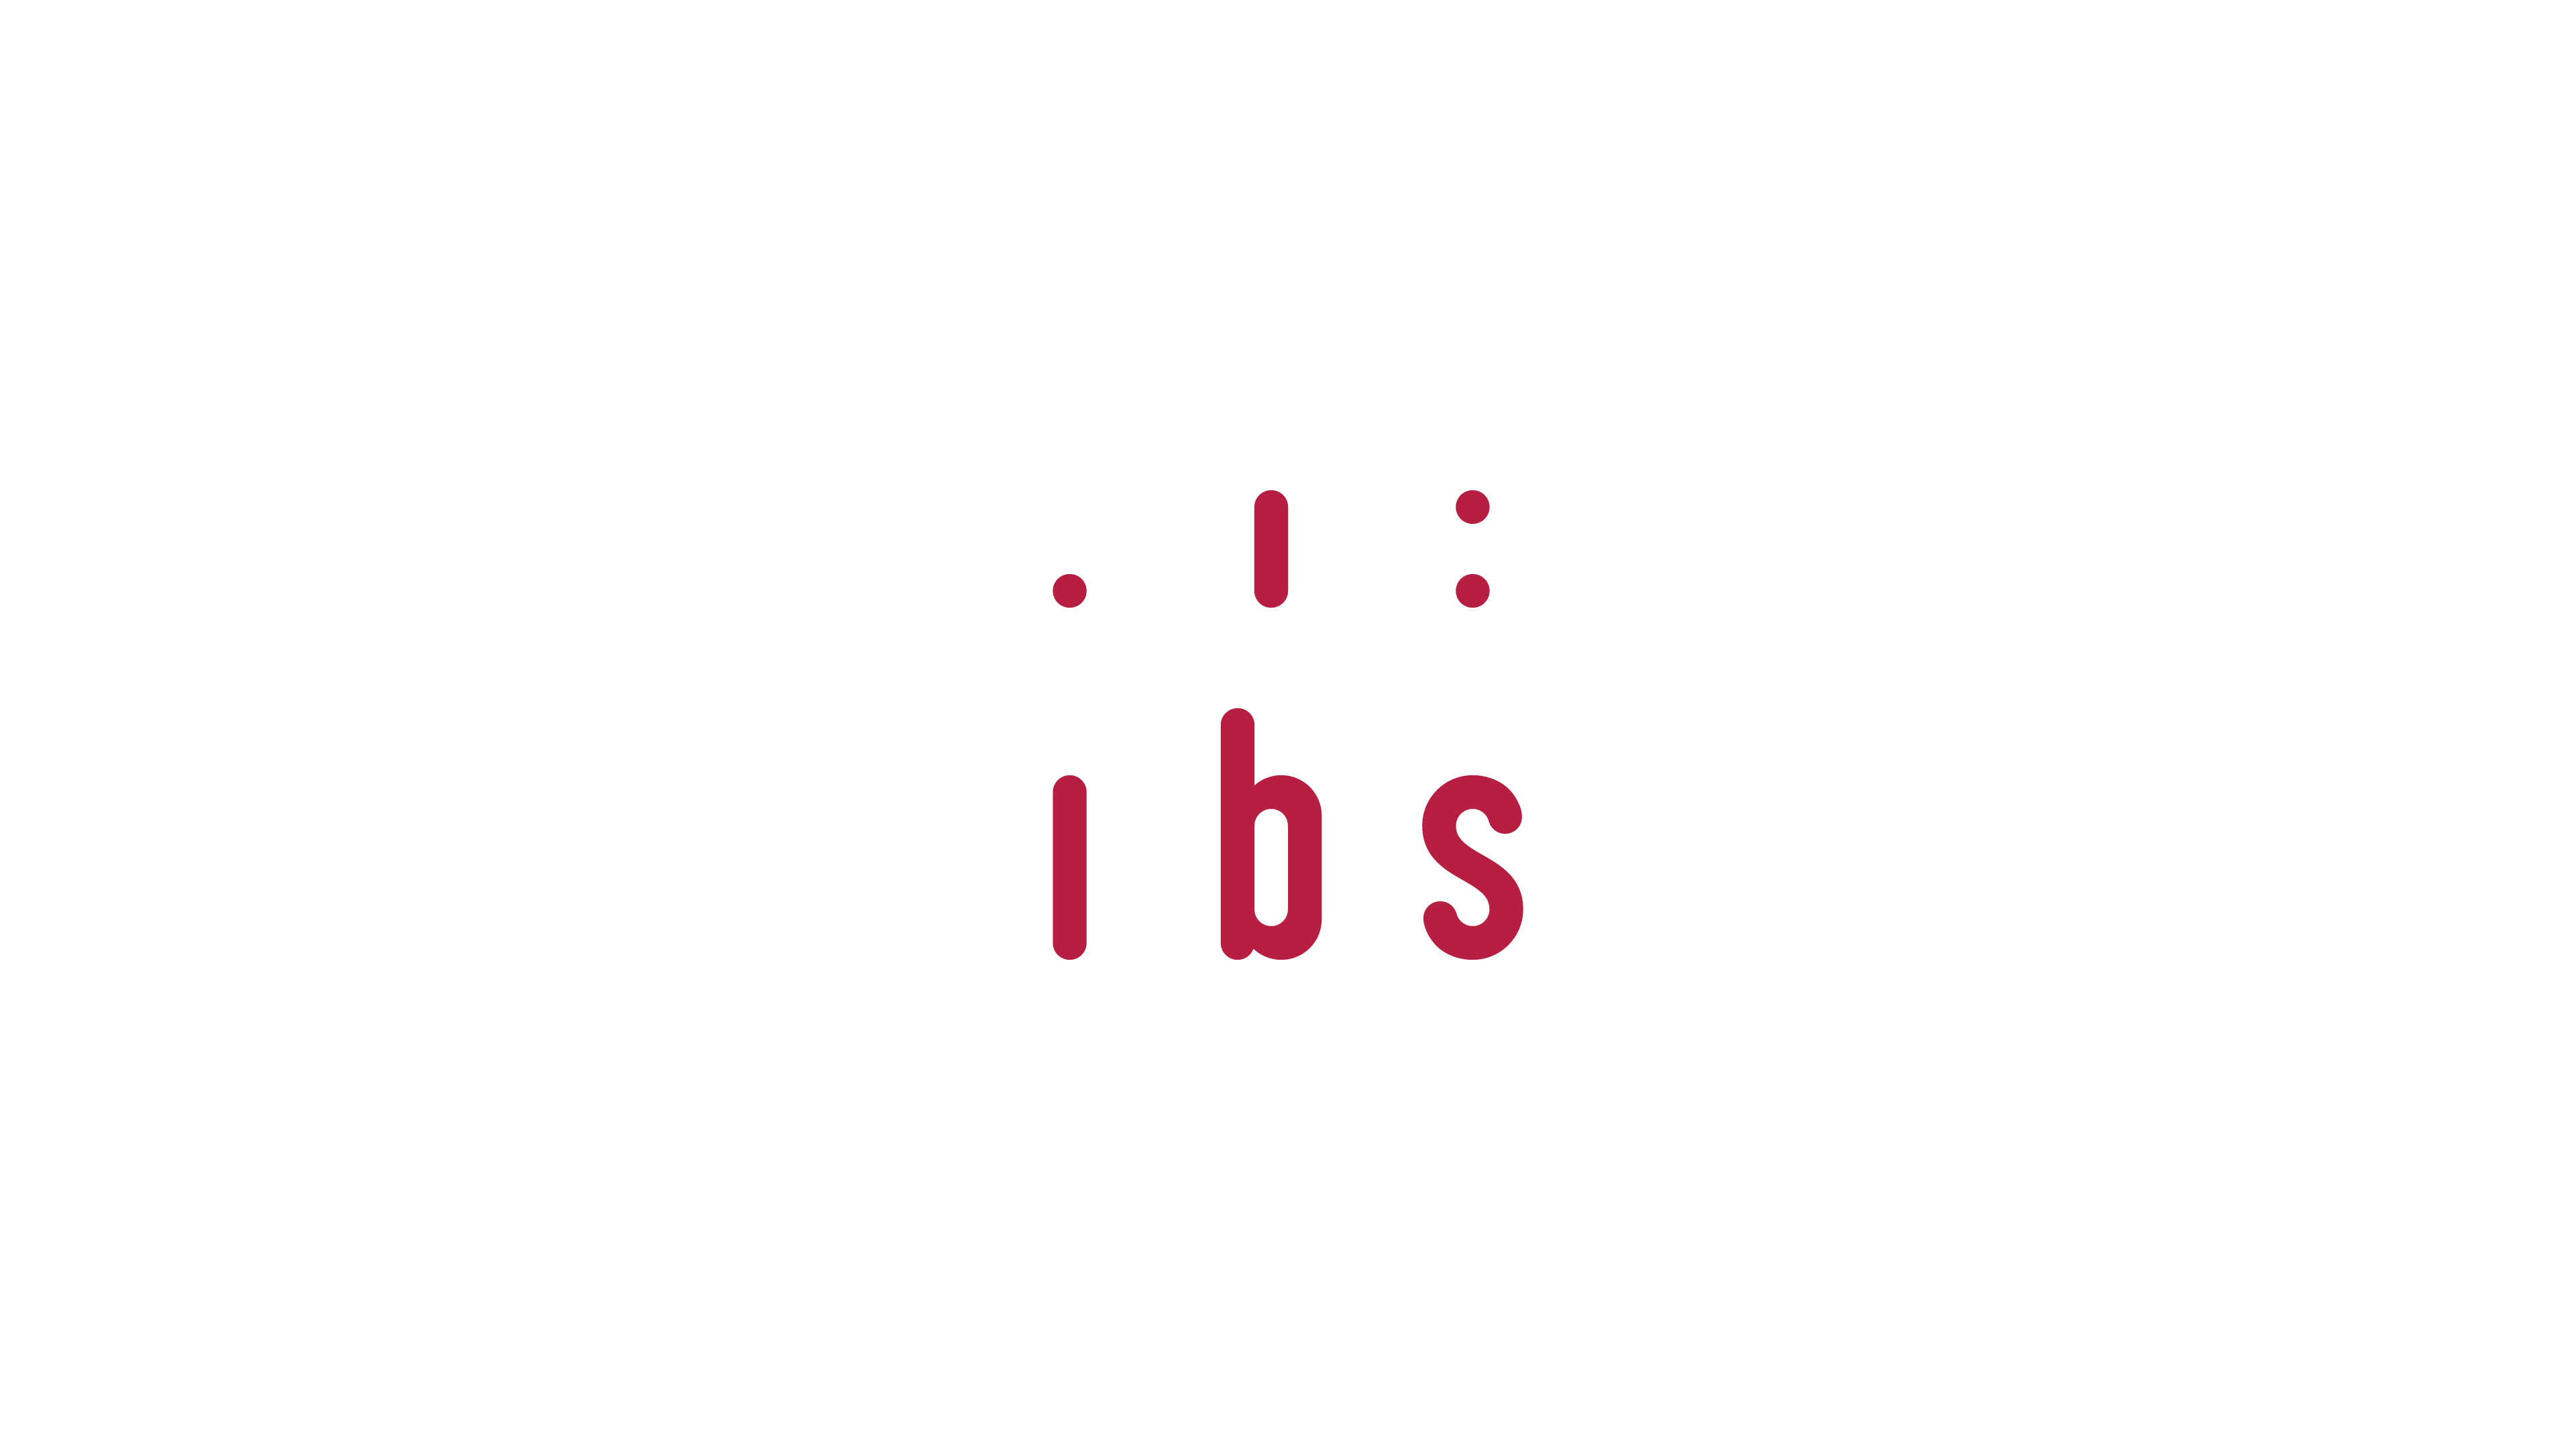 ibs - The Codeine Design